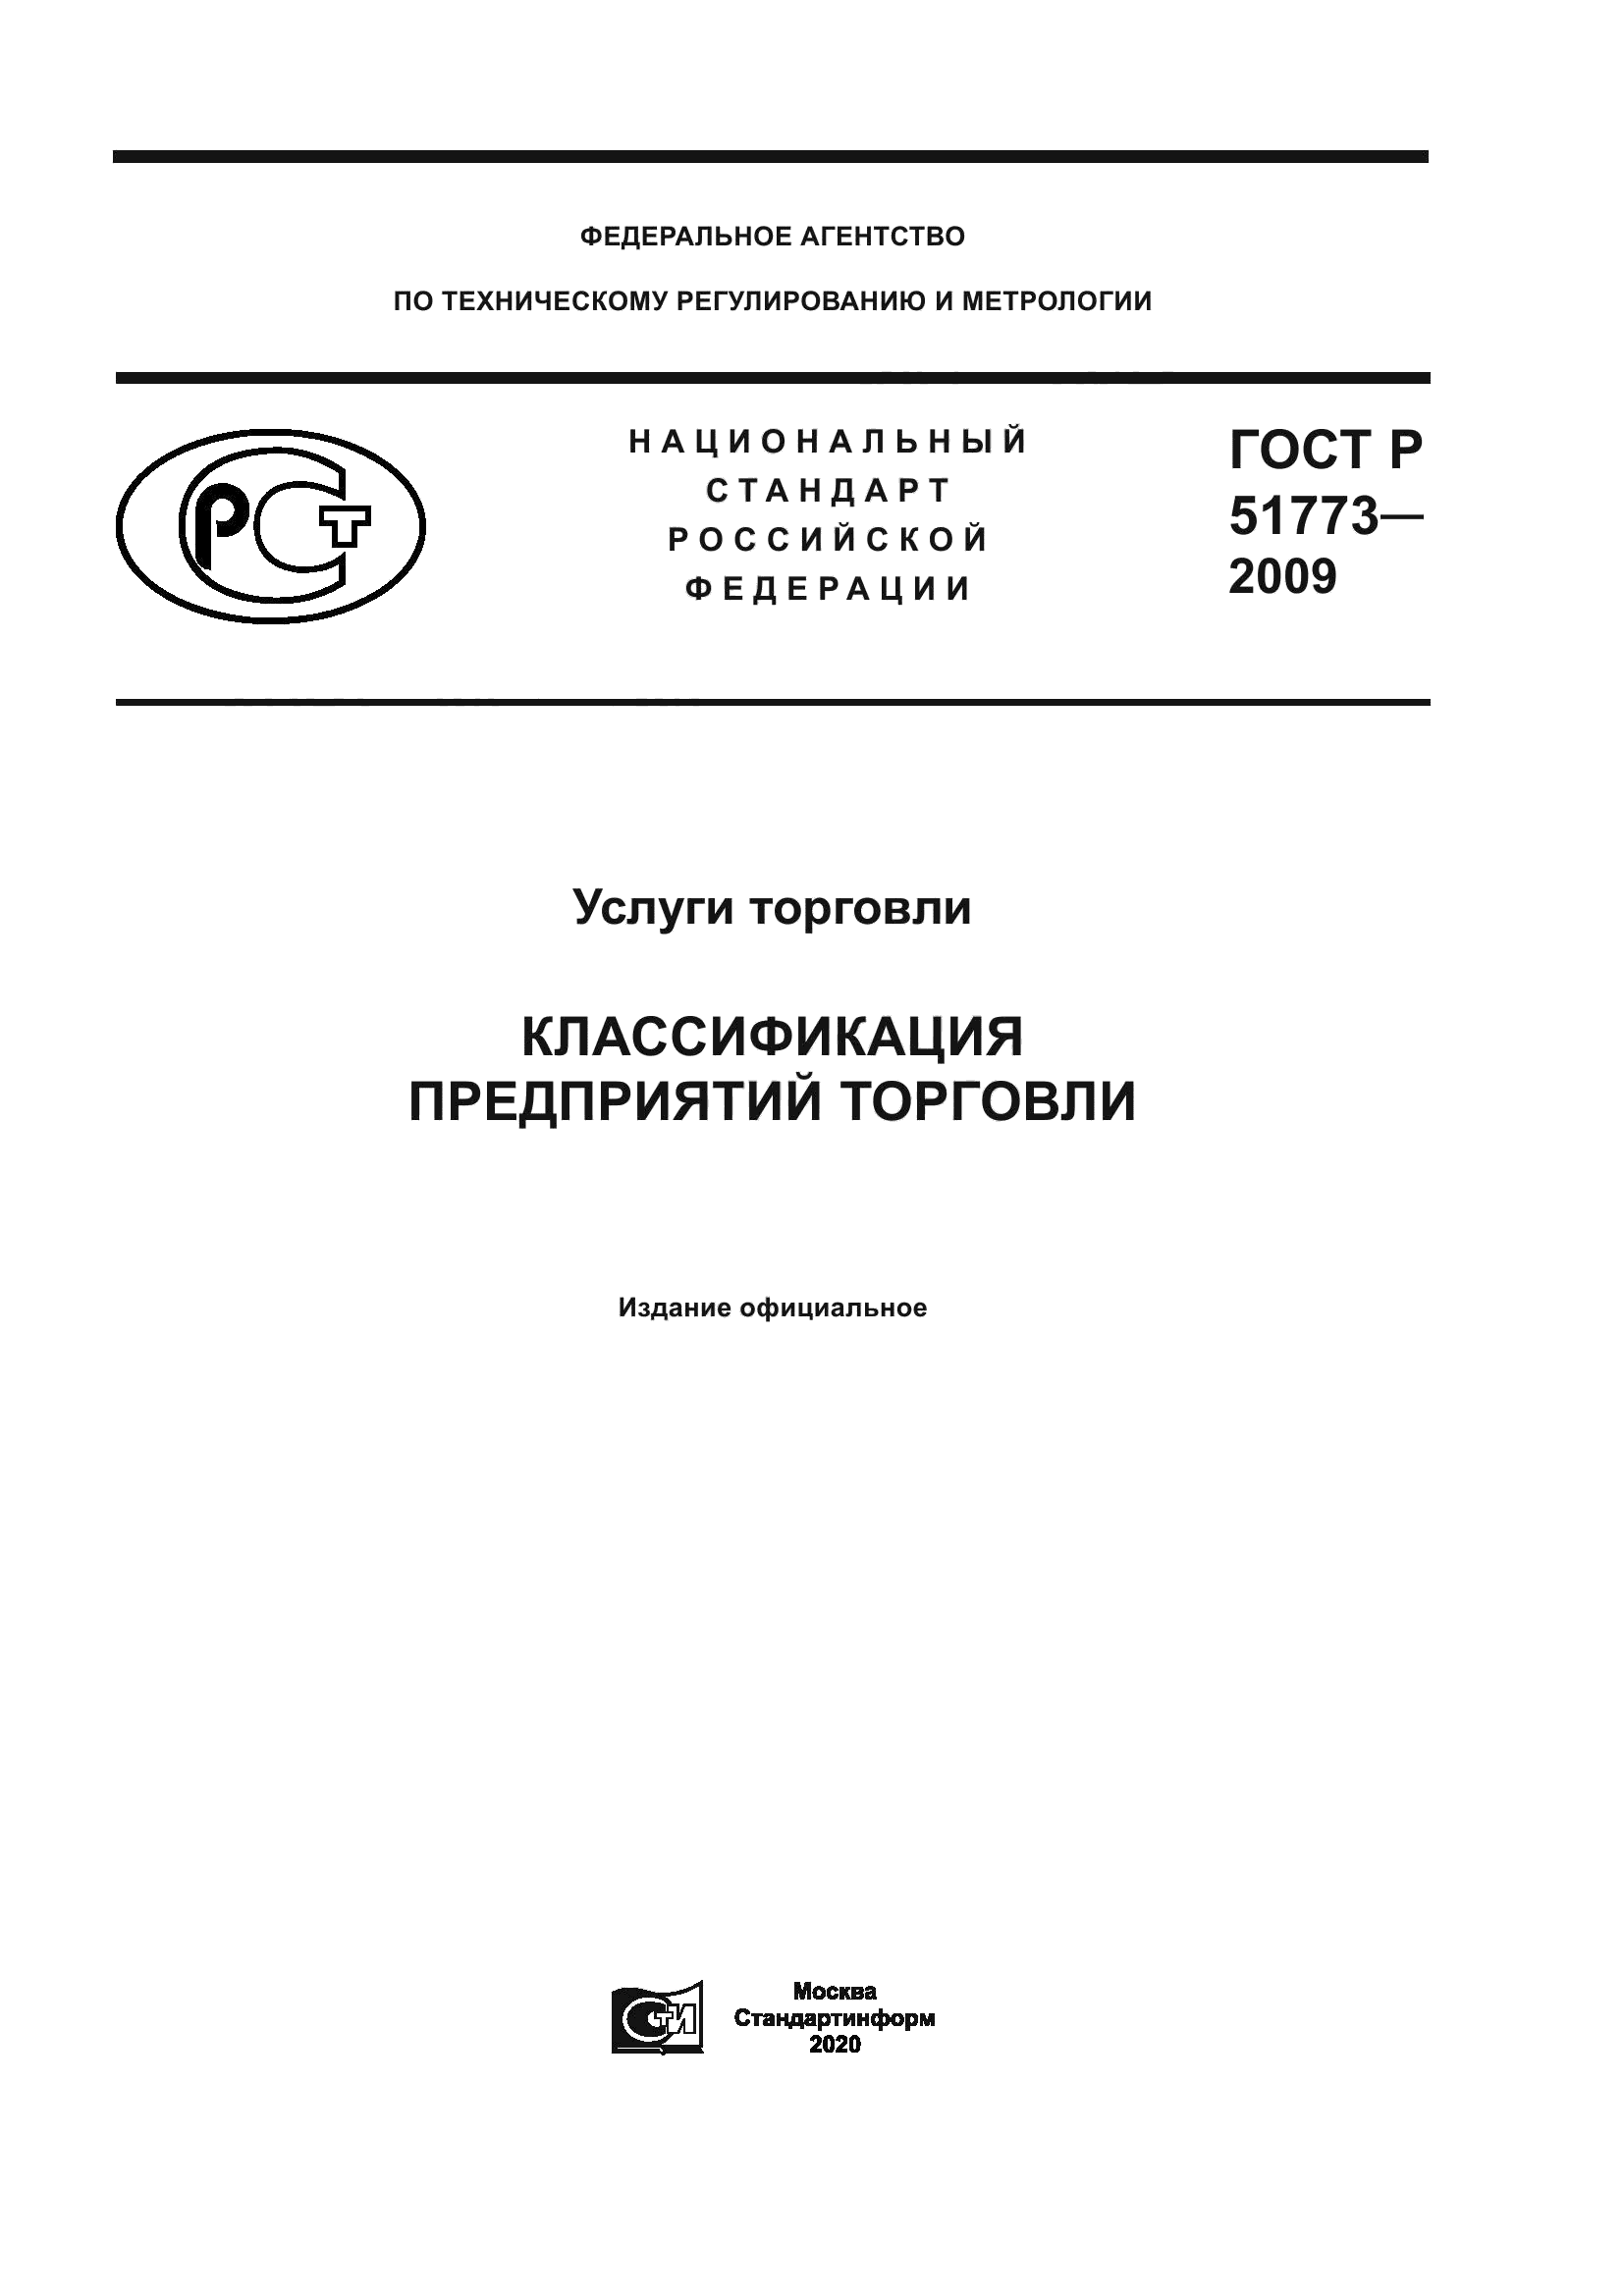 ГОСТ Р 51773-2009